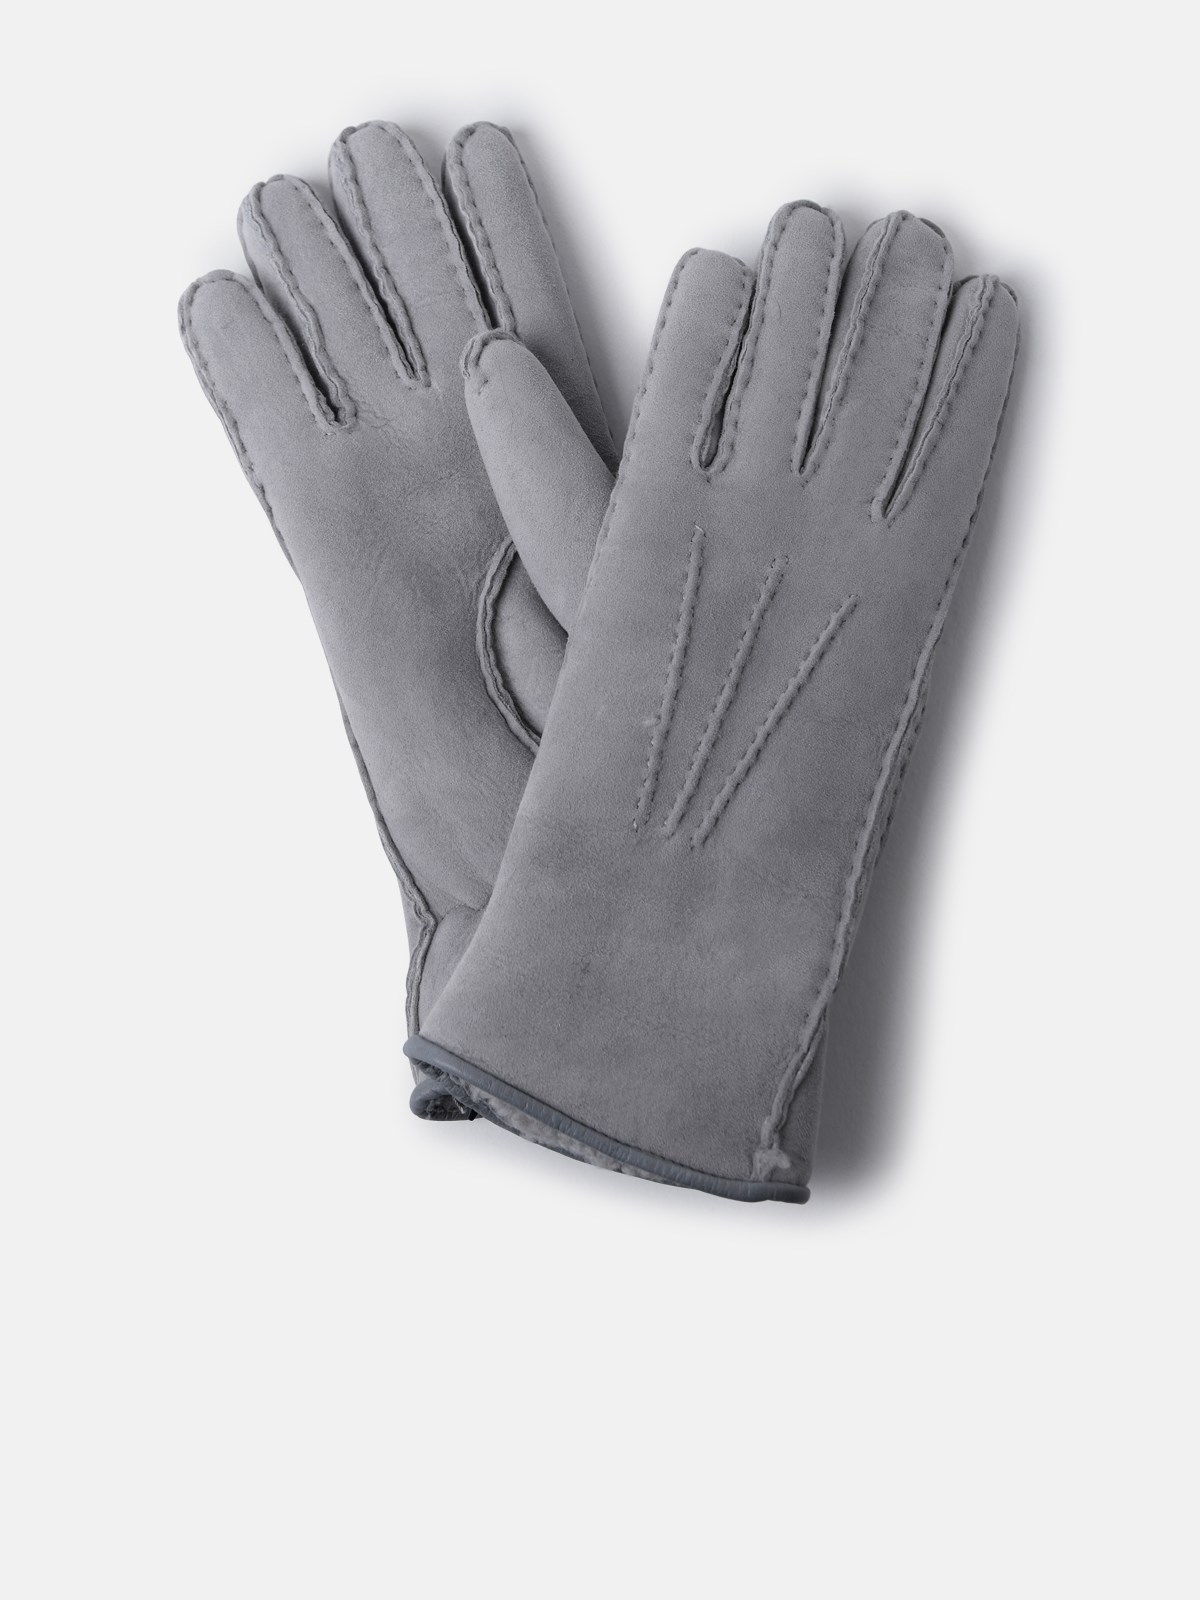 Sofia Gants Pearl Grey Merino Gloves